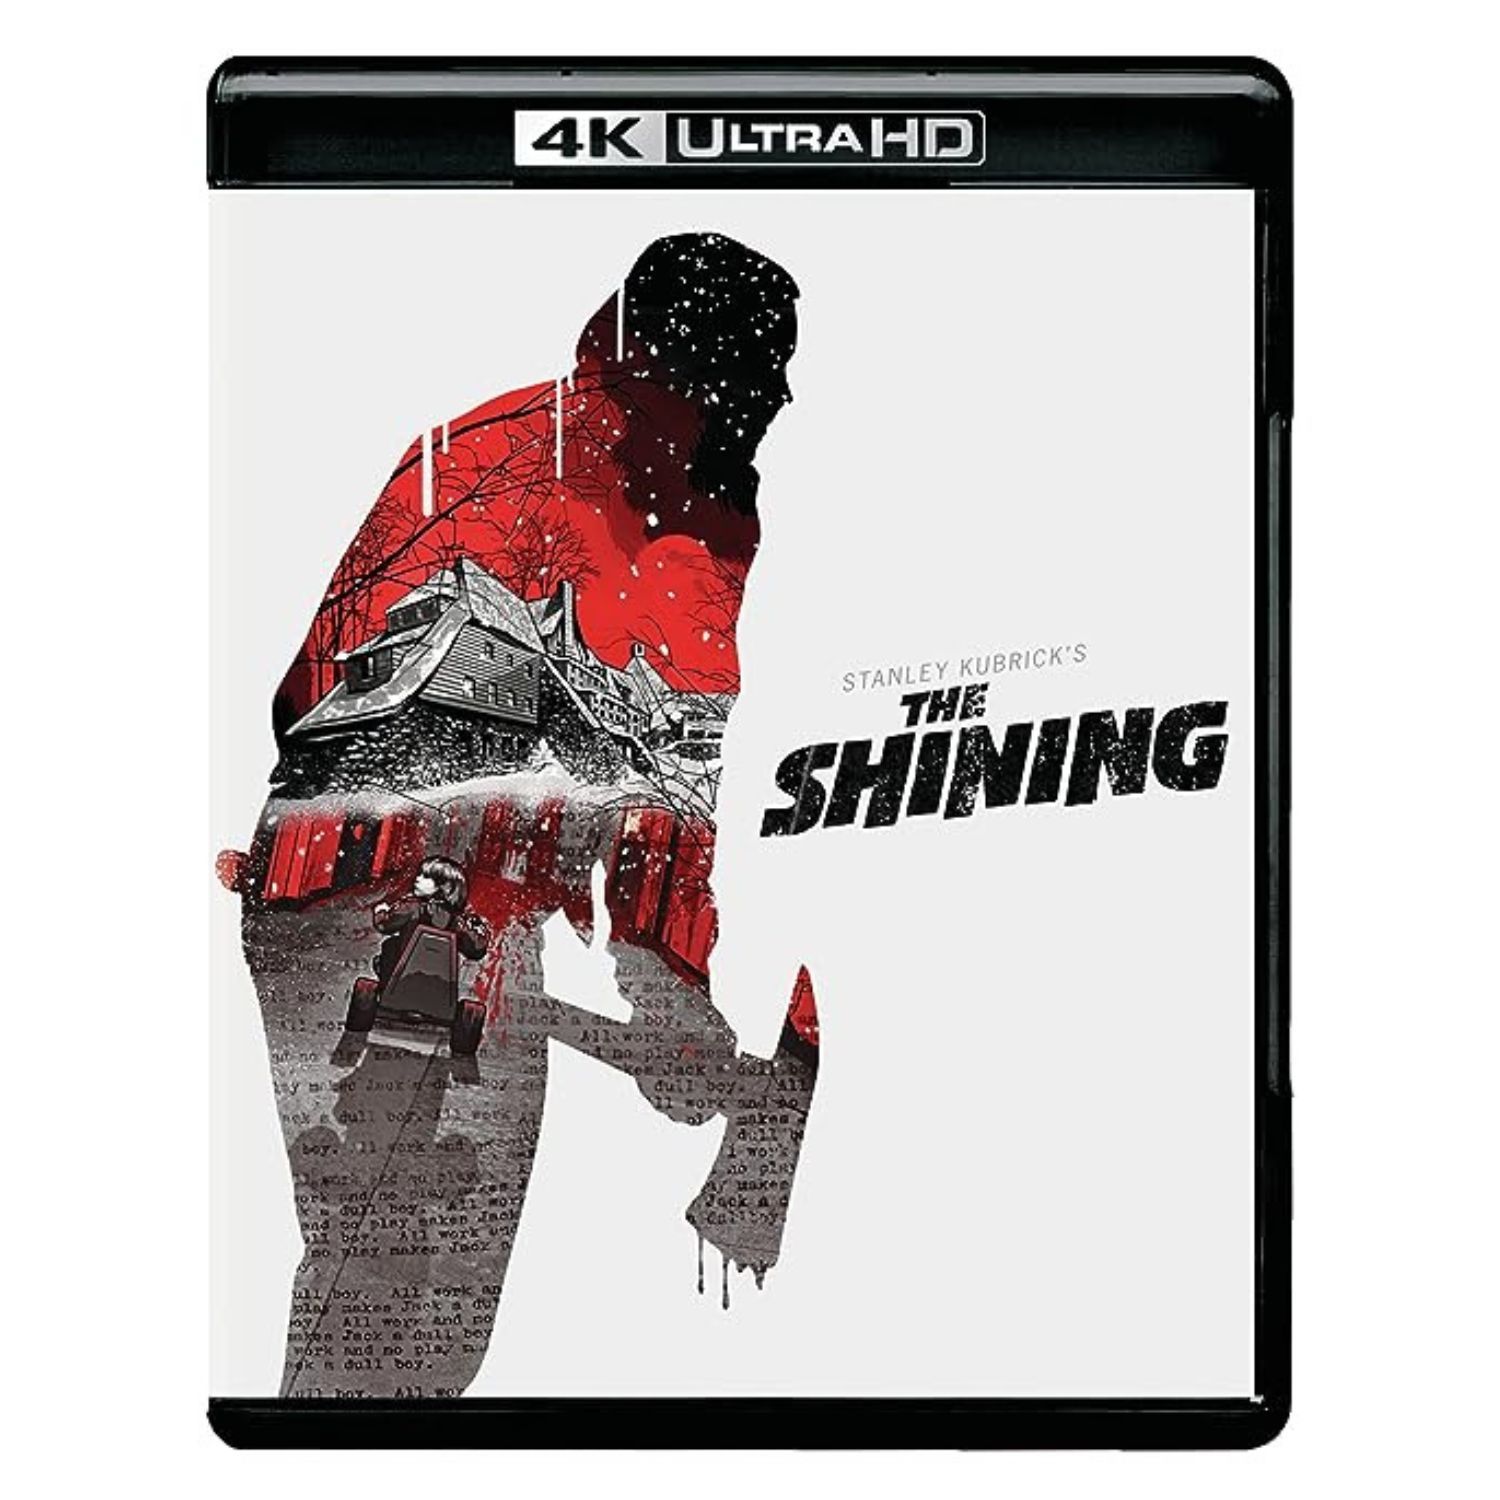 The Shining in 4k